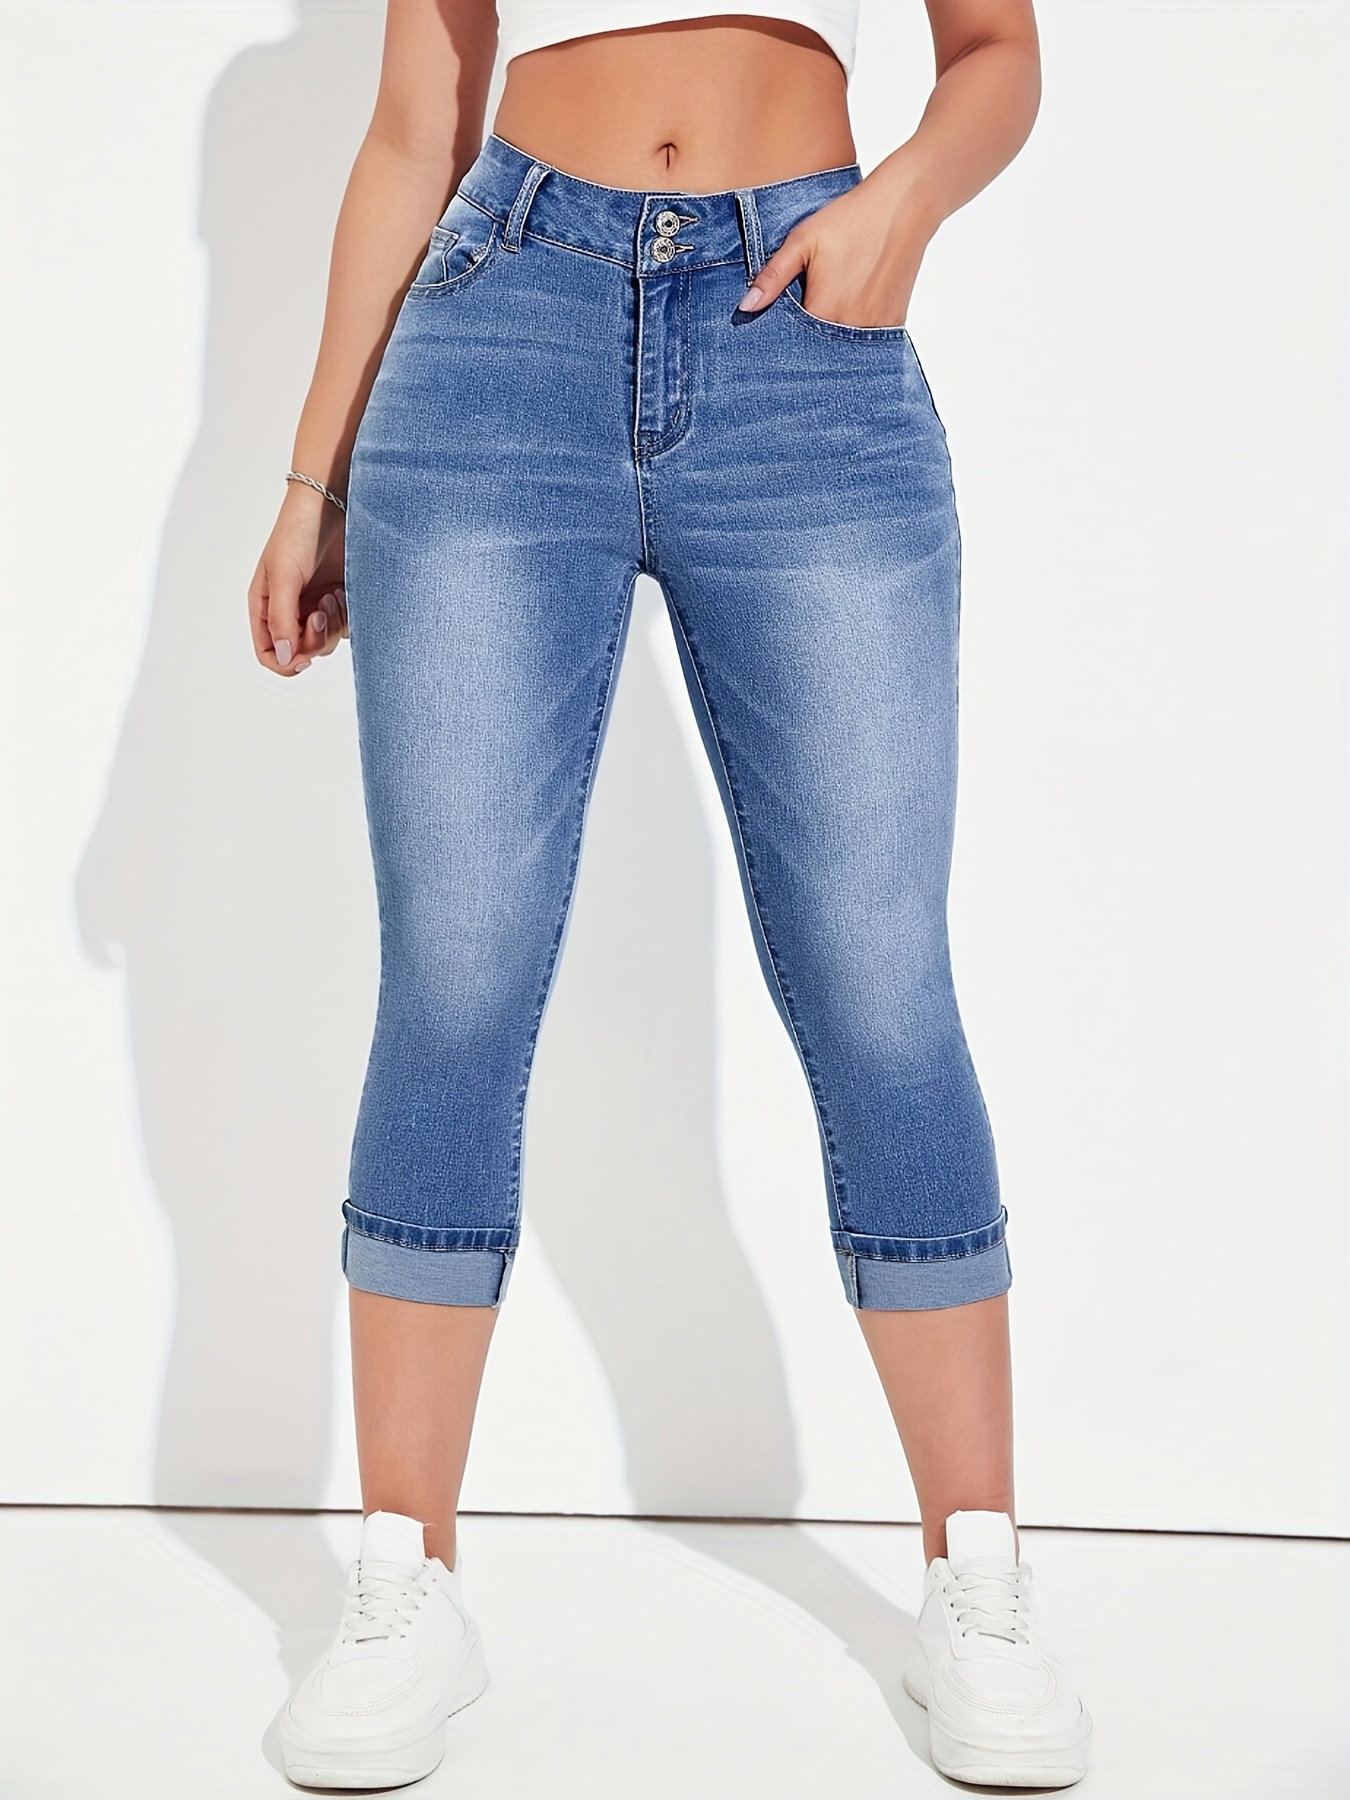 Plus Size Women's Fashion Summer Slim Fit Capri Jeans High Waist 3